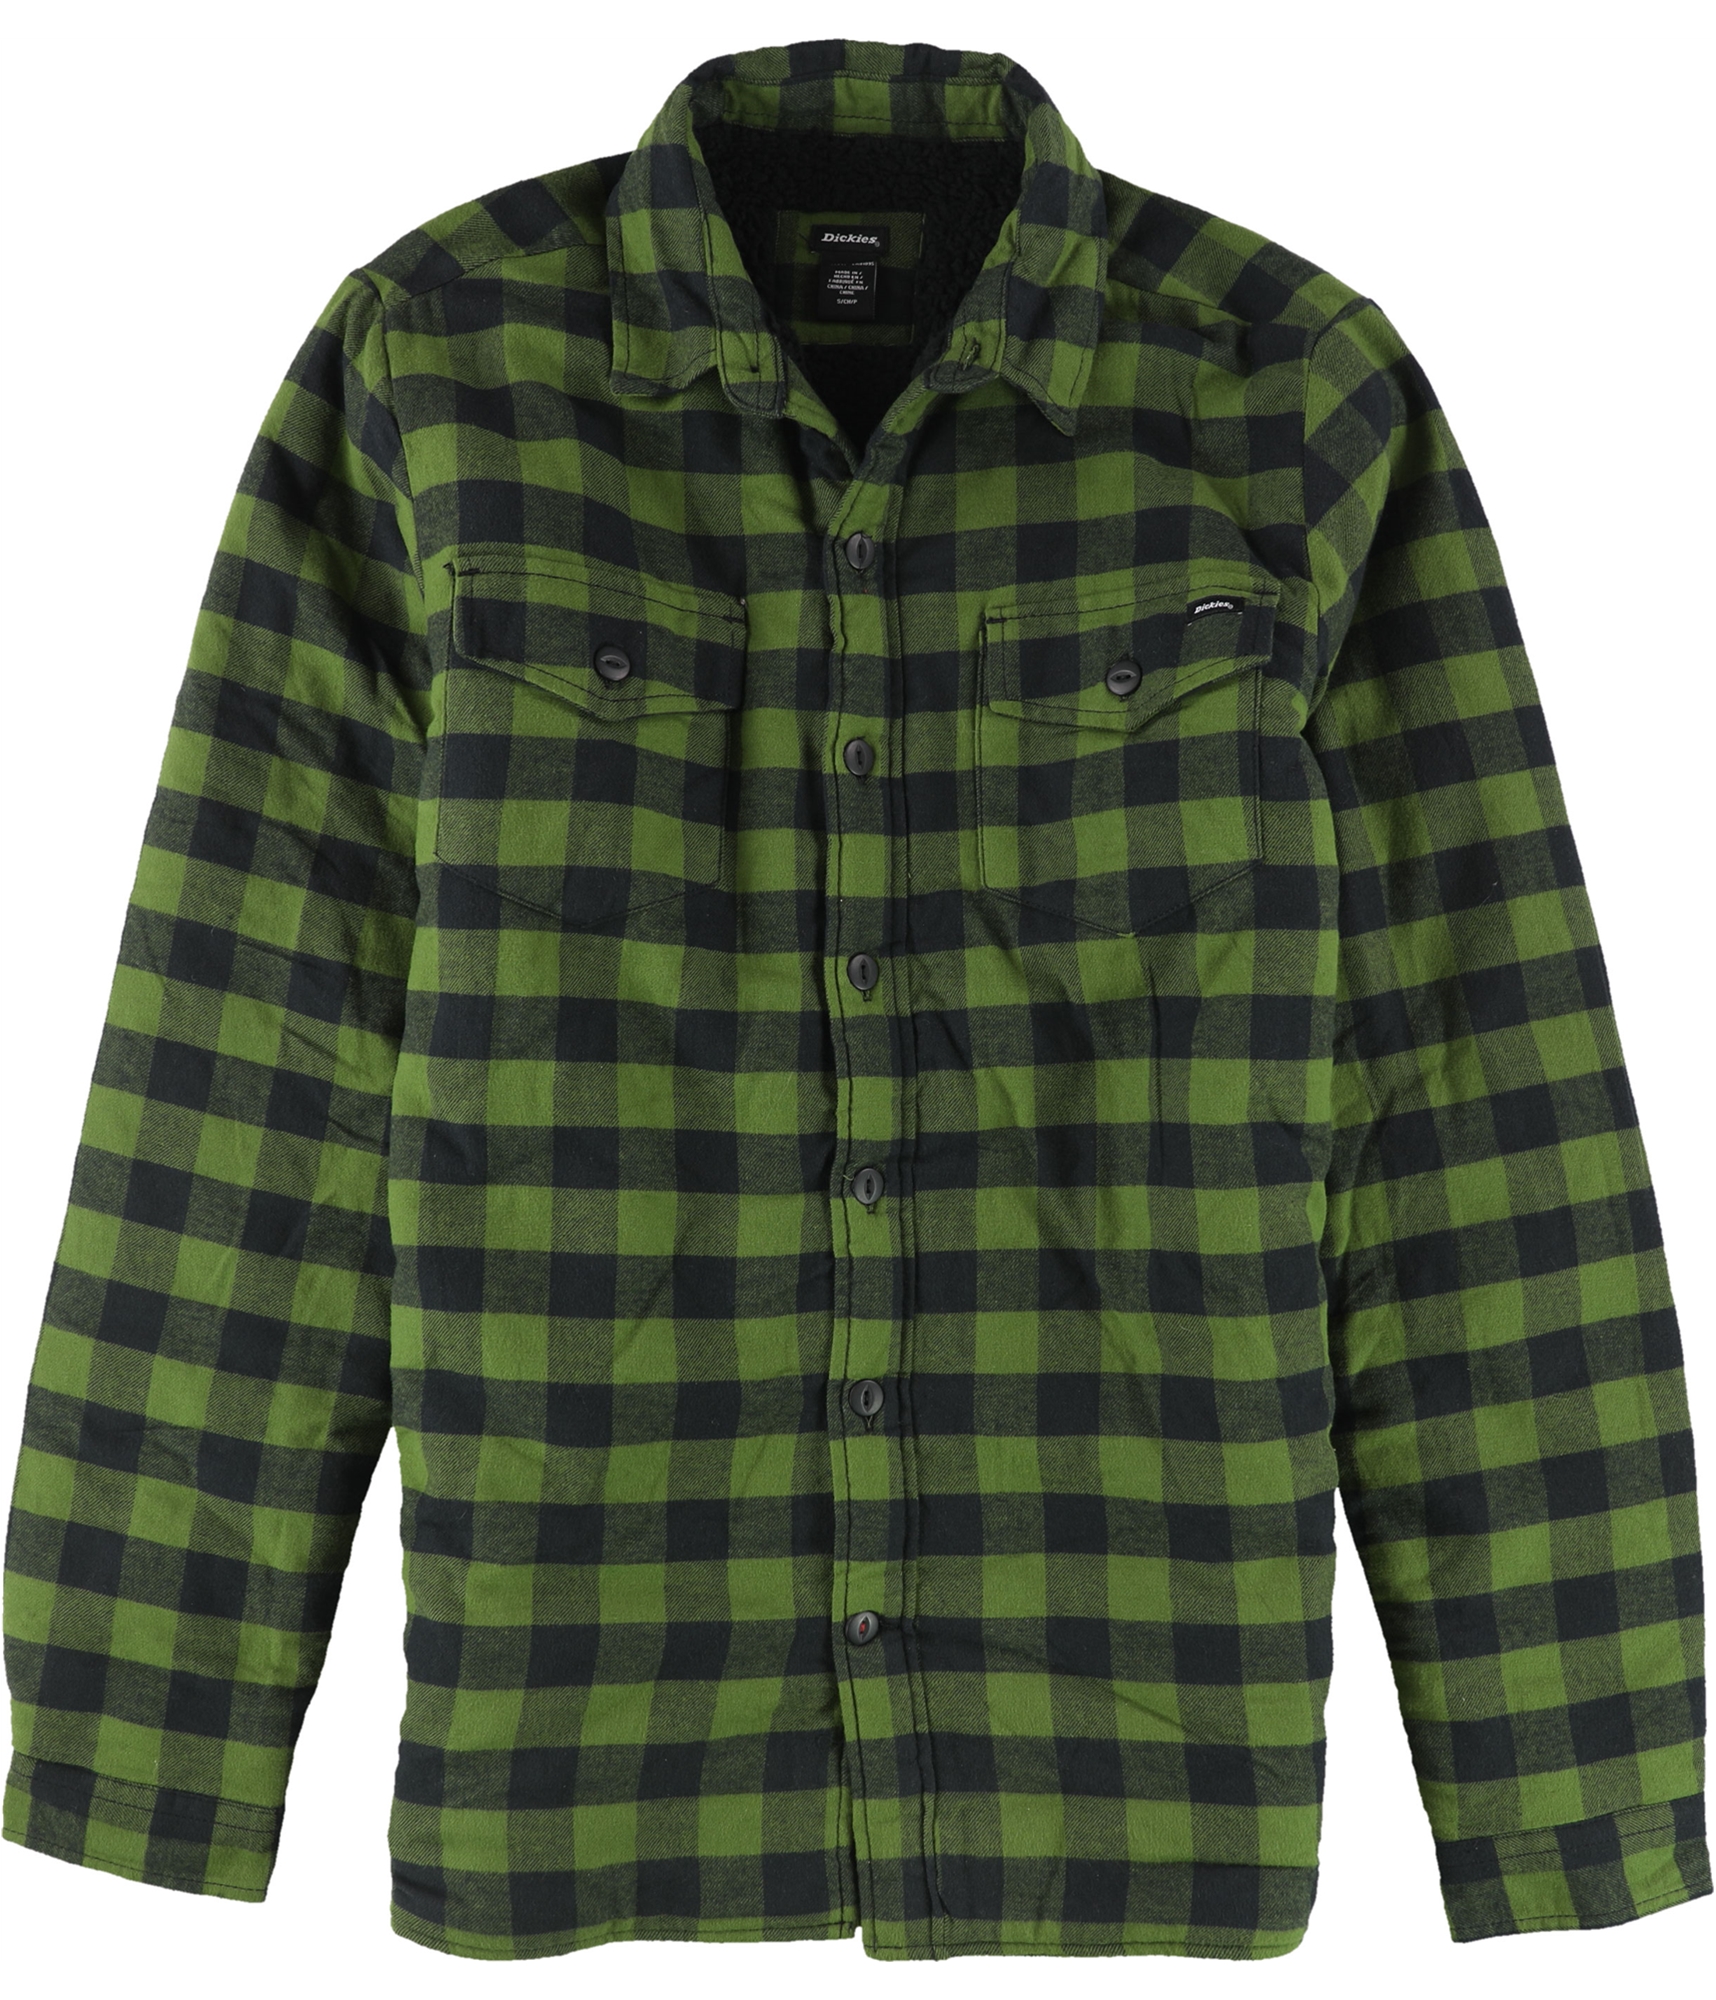 Dickies Mens Fleece Plaid Shirt Jacket, Green, Large | eBay